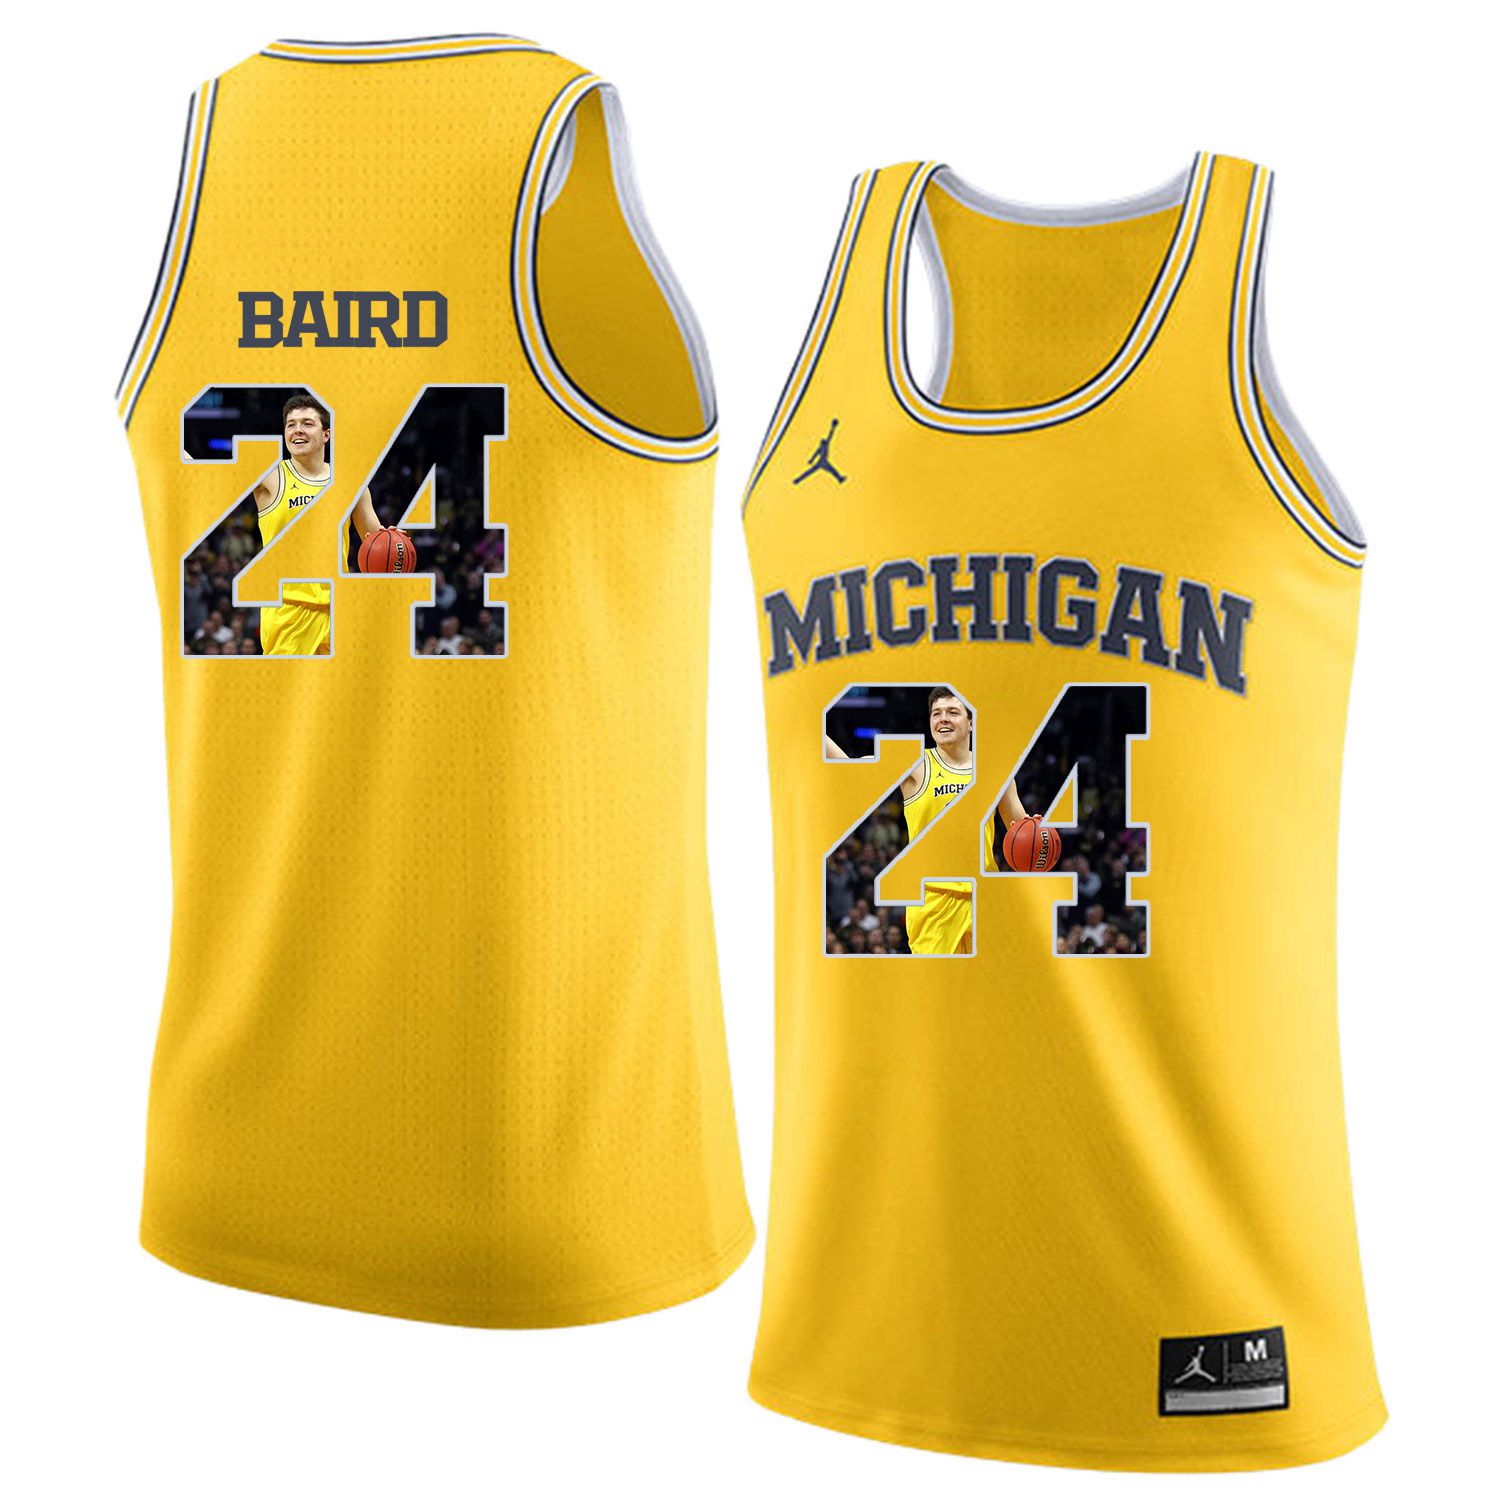 Men Jordan University of Michigan Basketball Yellow 24 Baird Fashion Edition Customized NCAA Jerseys